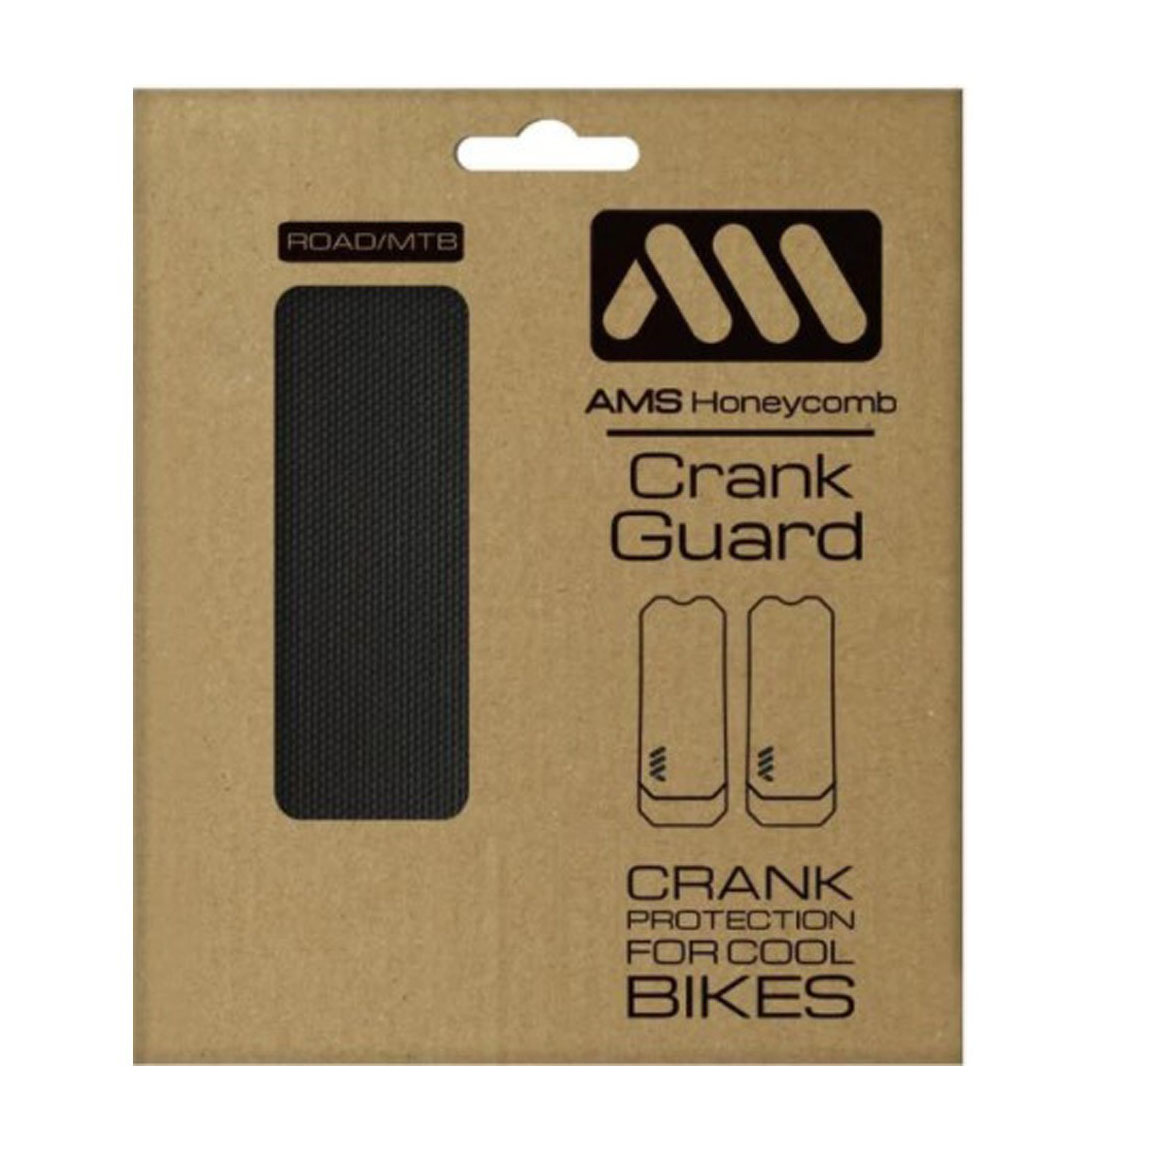 All Mountain Style Crank Guard, Black/Silver